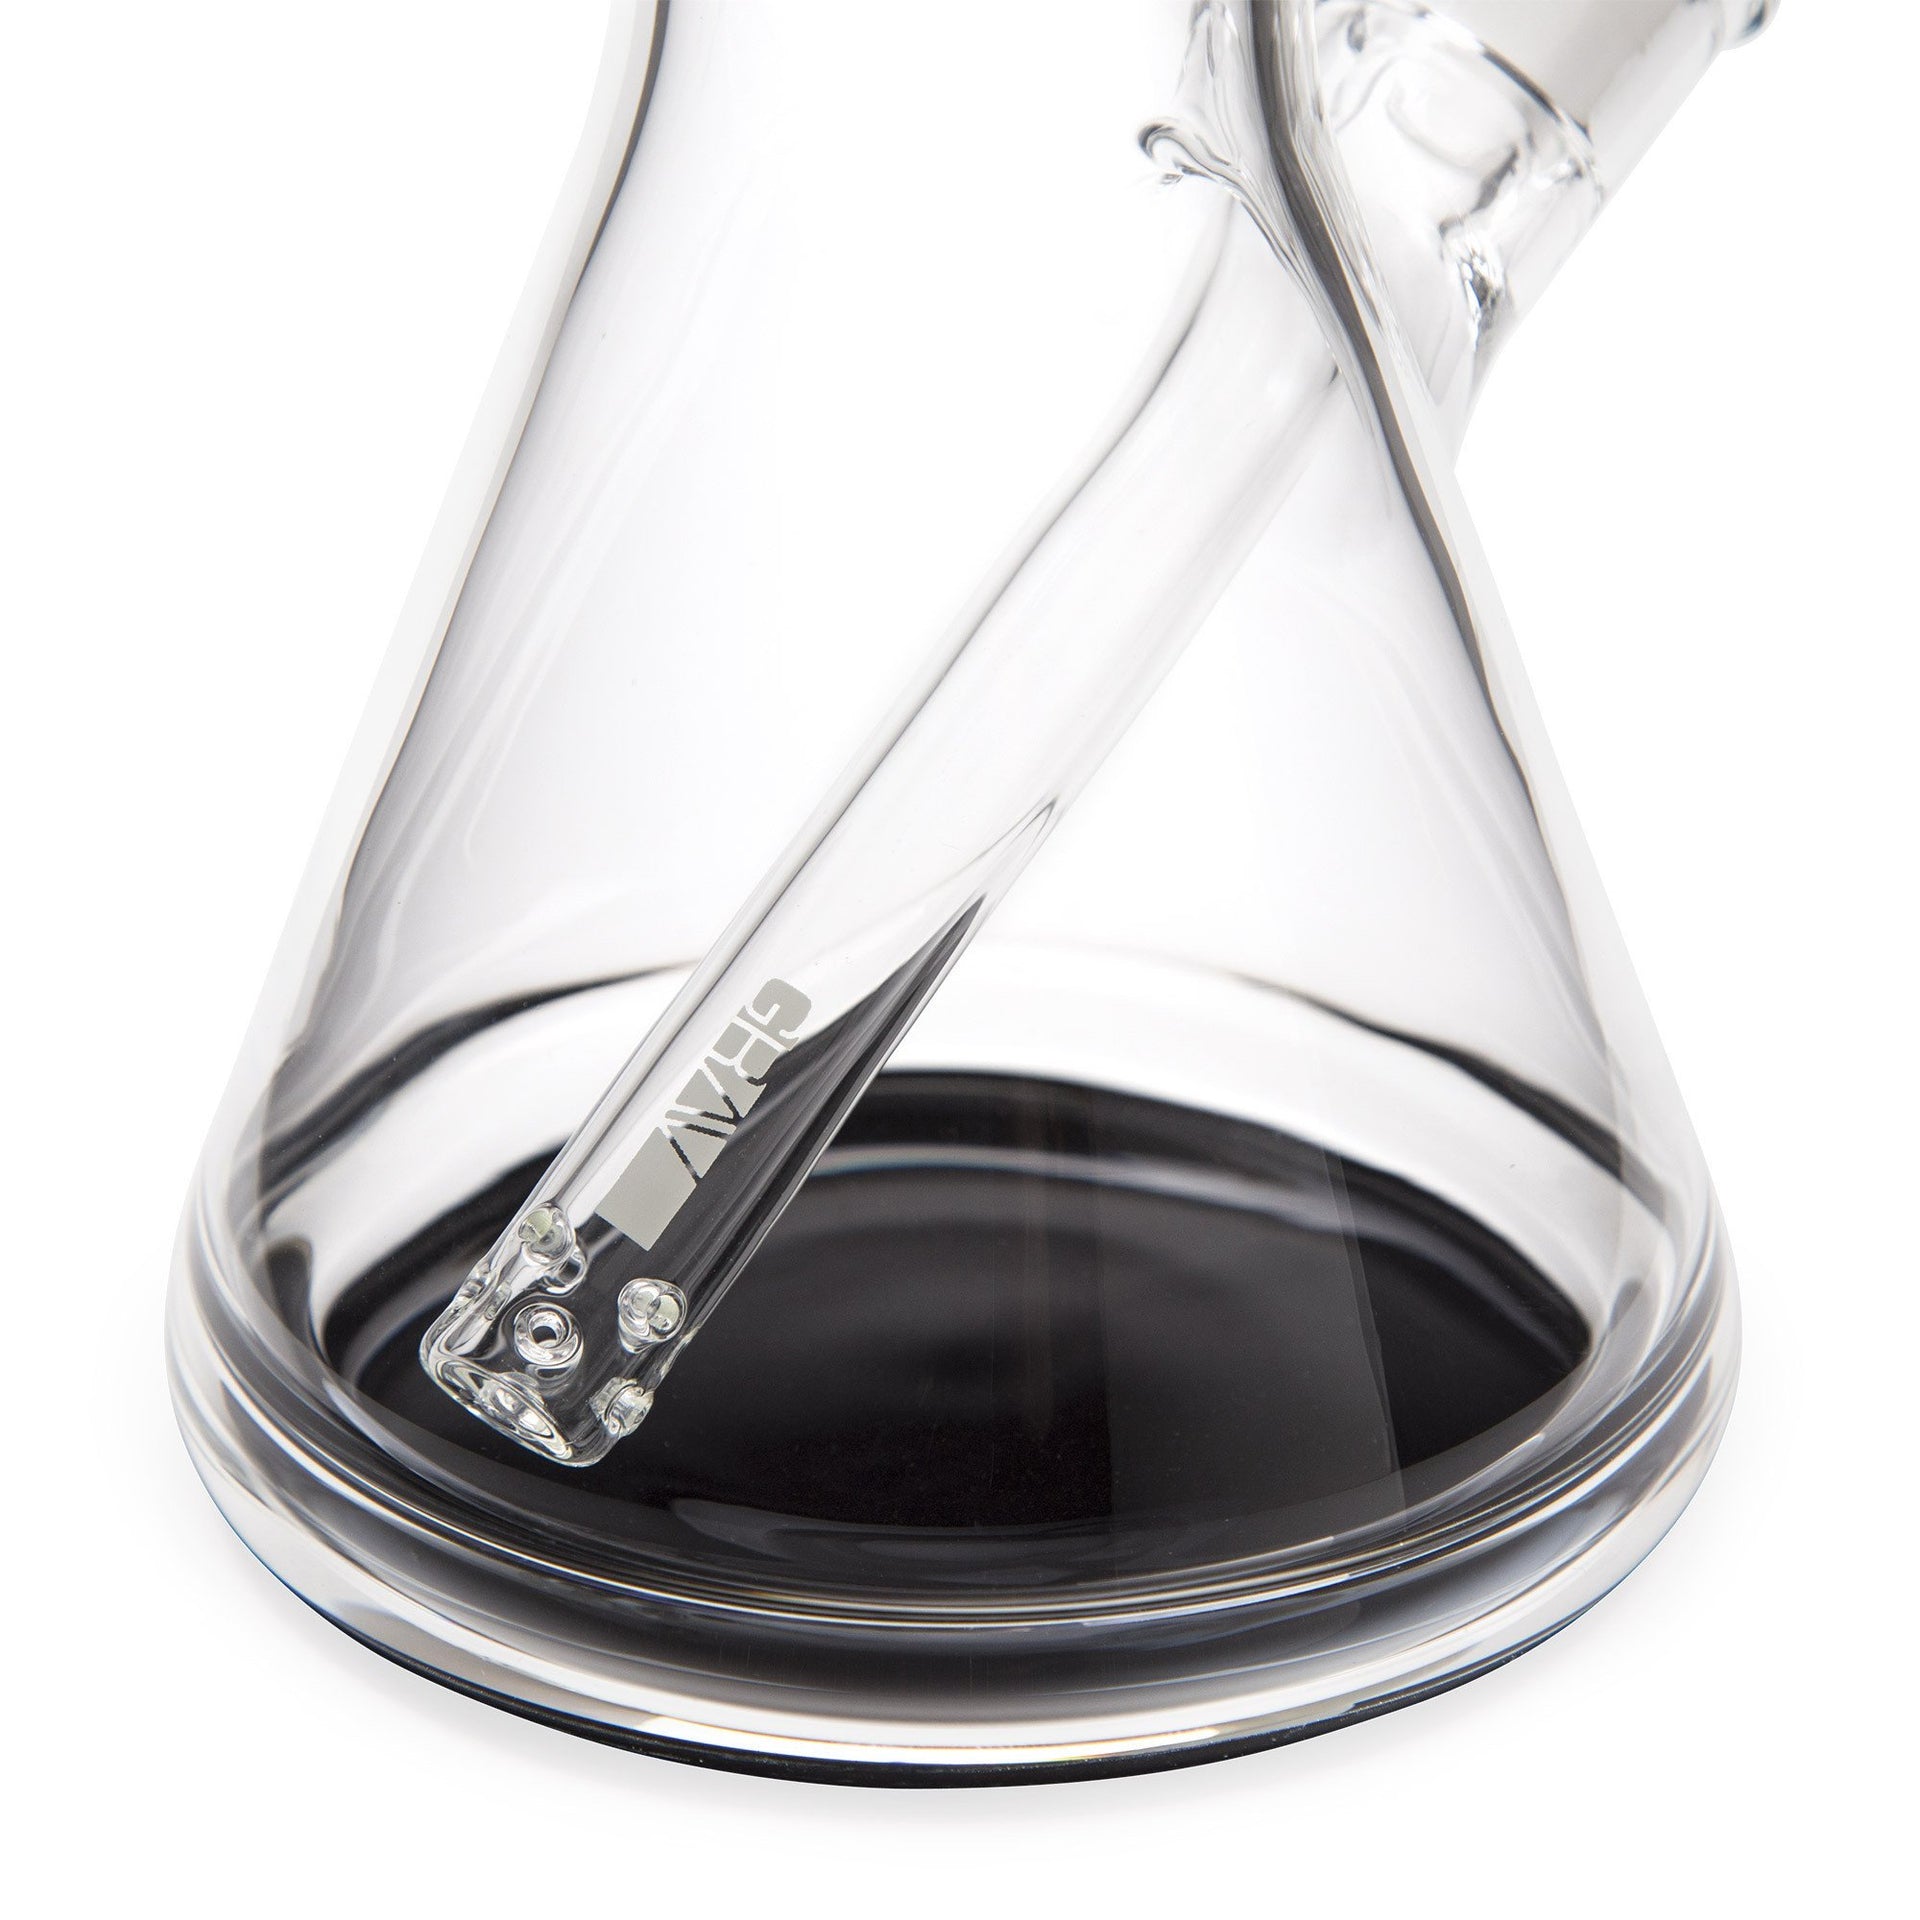 GRAV 16in Beaker Water Pipe - Black - 420 Science - The most trusted online smoke shop.